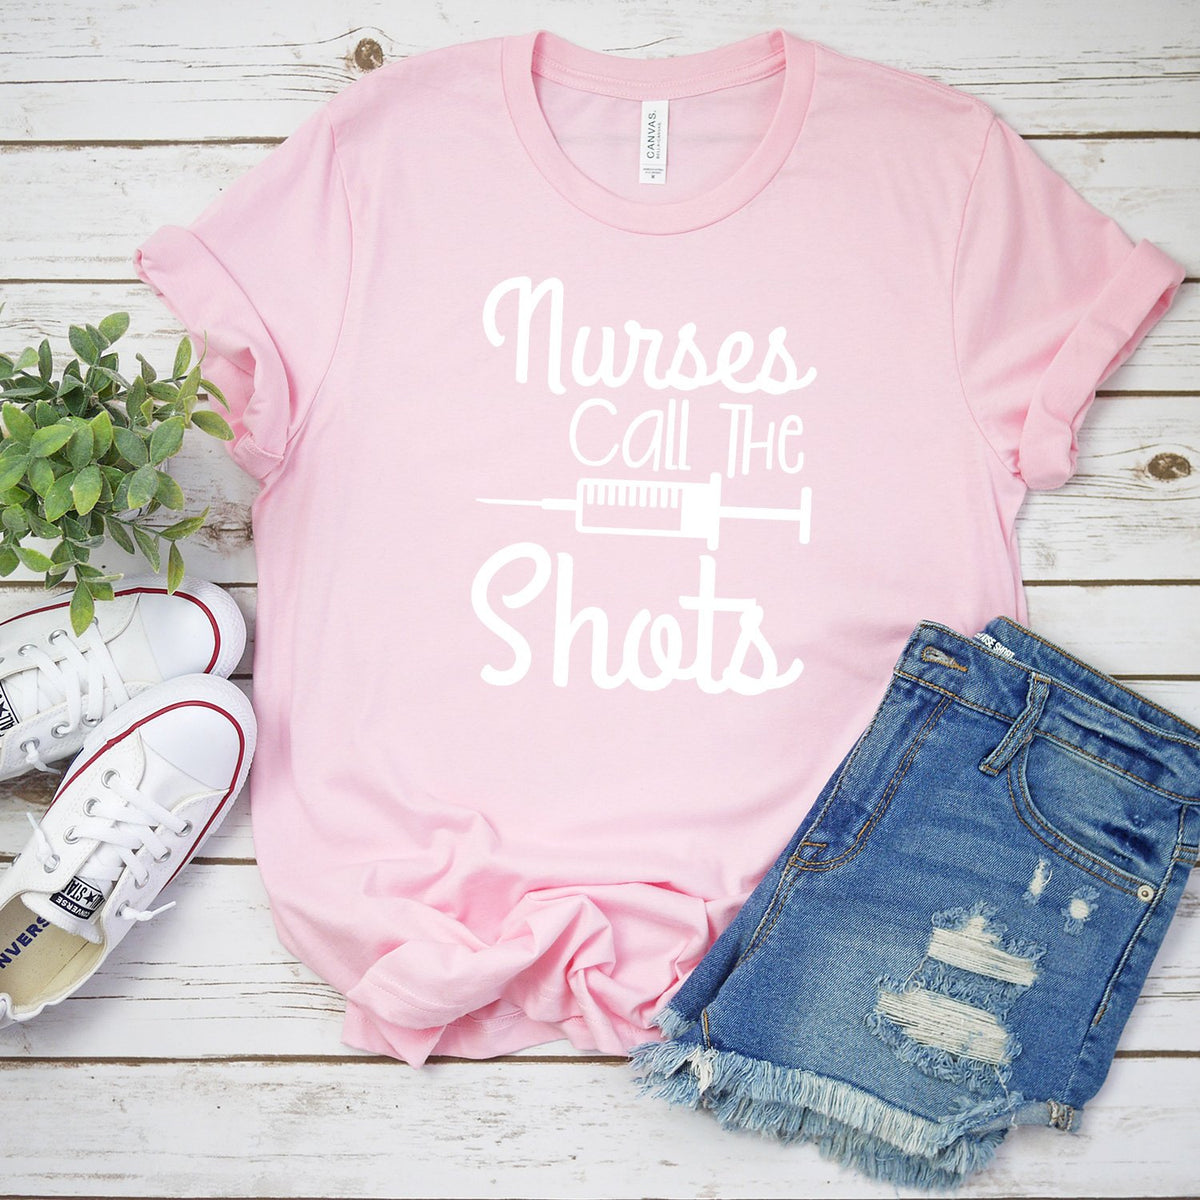 Nurses Call the Shots - Short Sleeve Tee Shirt